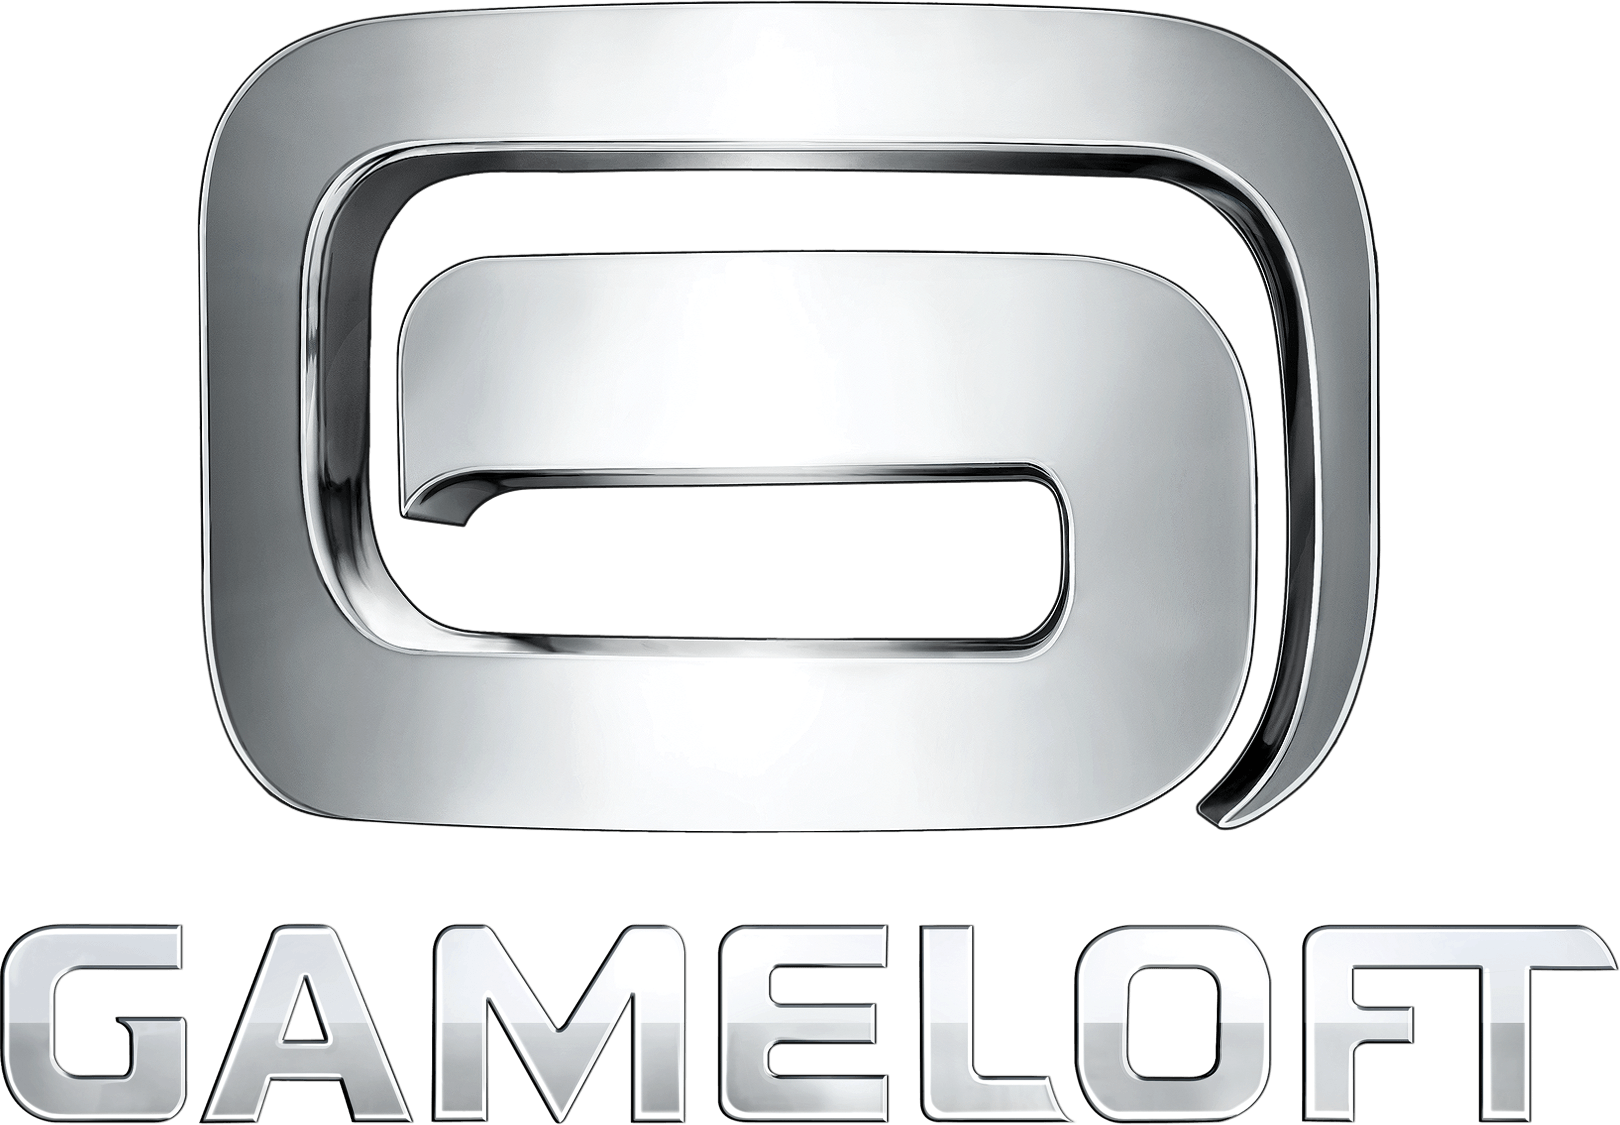 Gameloft Logo - Image - Gameloft Logo (2010; White Version).png | Logopedia | FANDOM ...